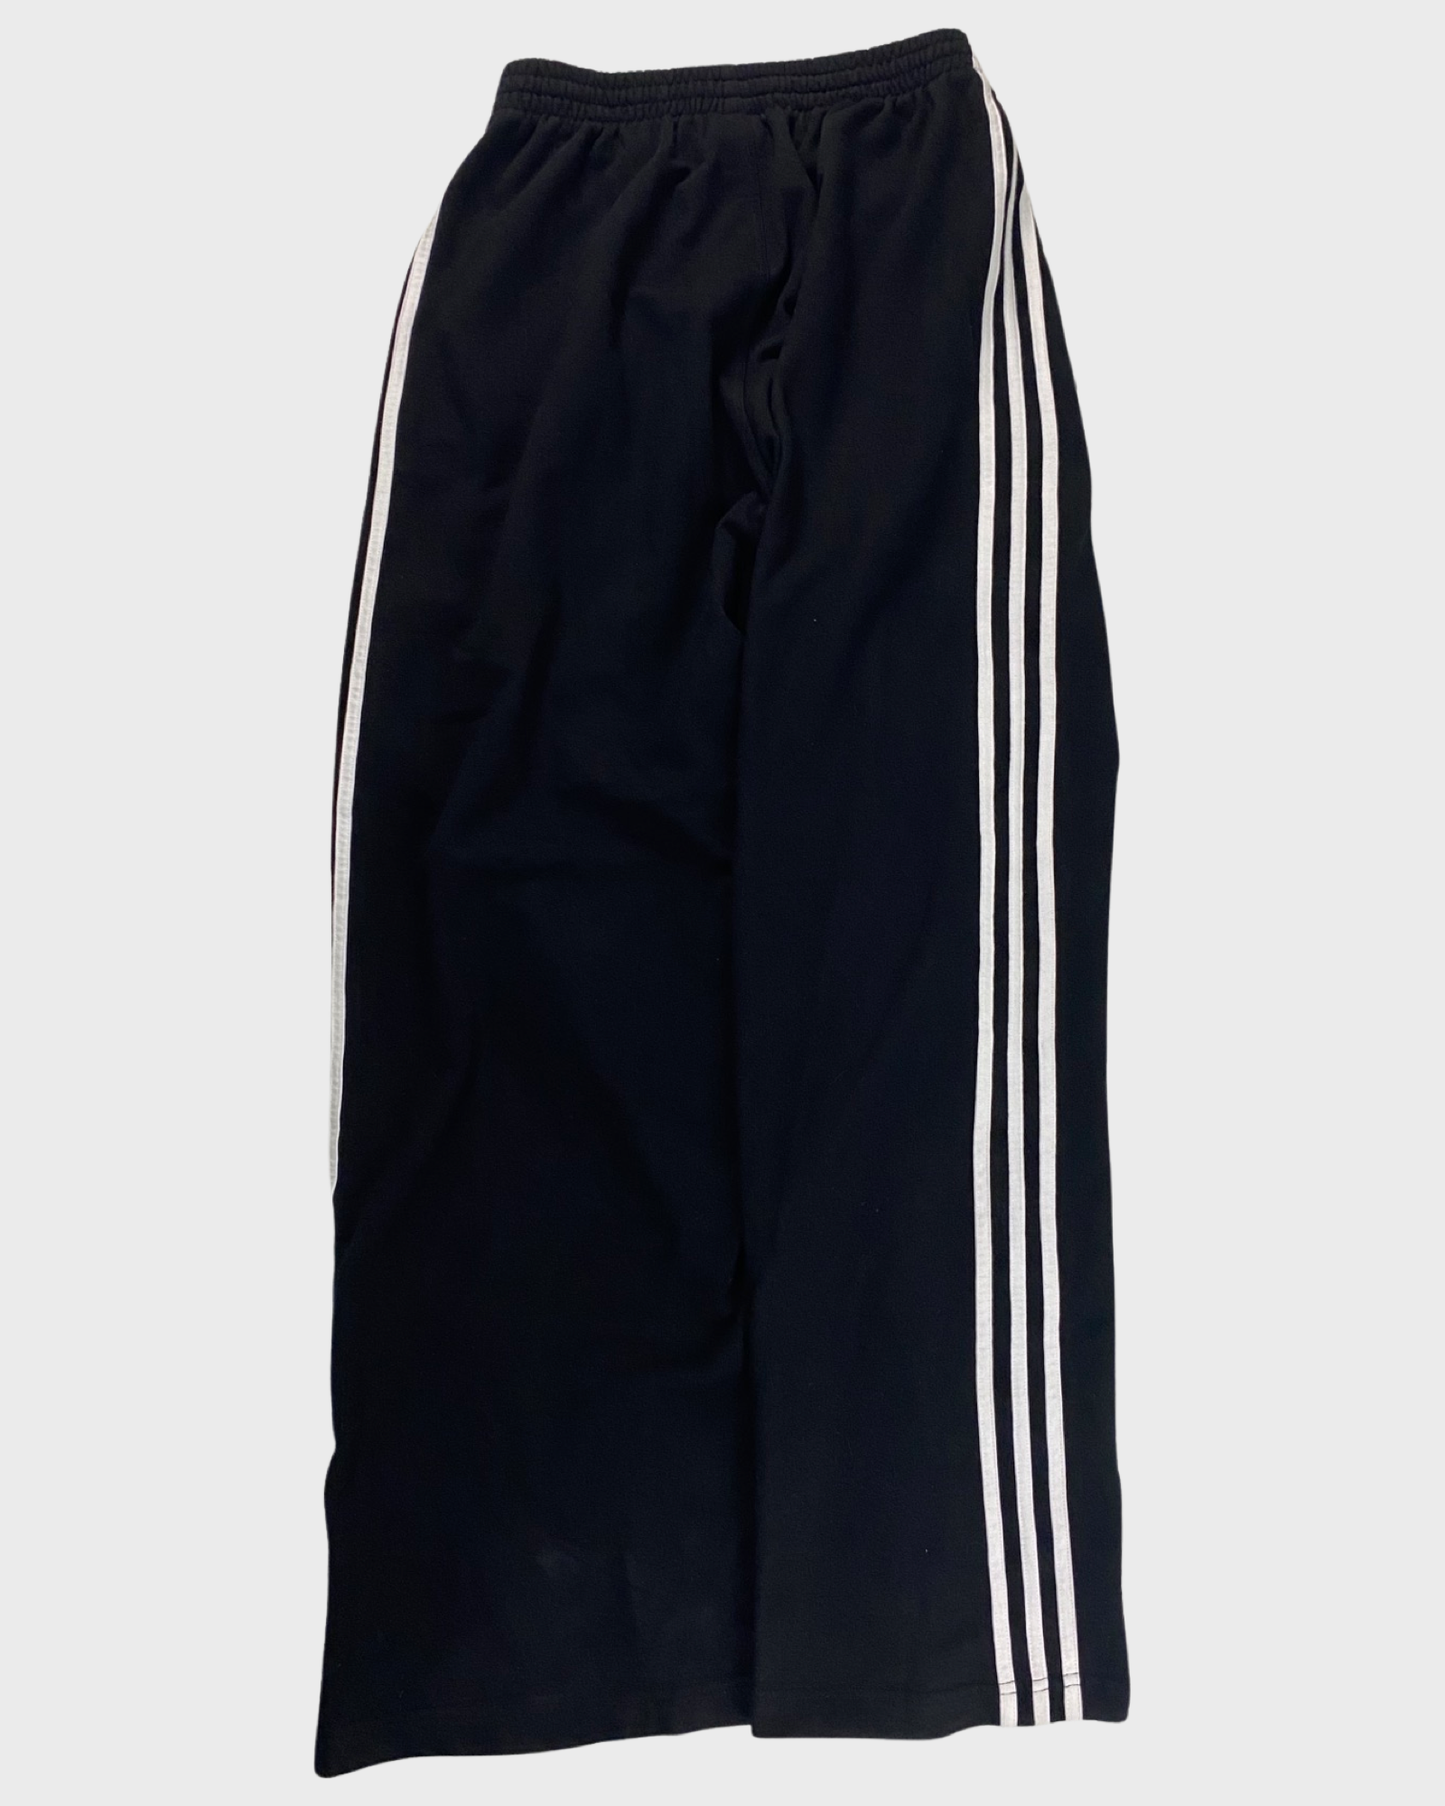 Balenciaga x Adidas Spring23 NYC Show long baggy sweatpants in black SZ:S